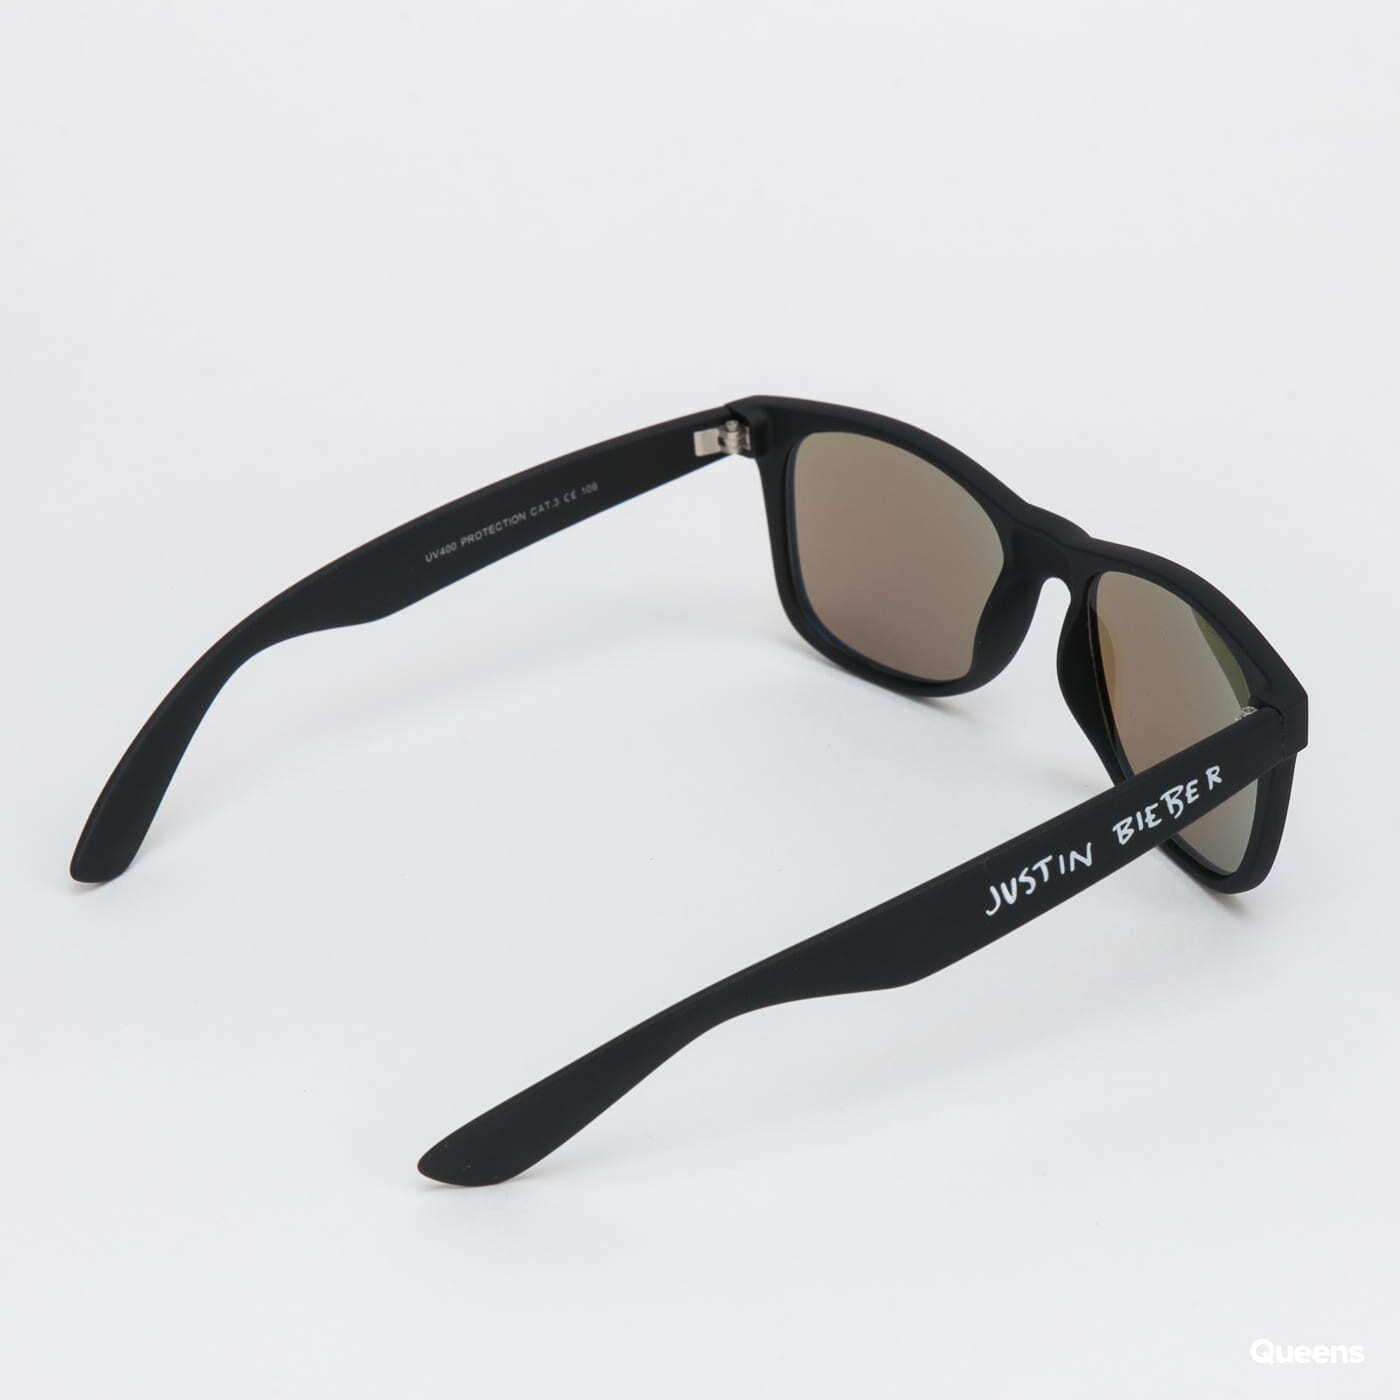 Sonnenbrillen Urban Classics Justin Bieber Sunglasses MT Black/ Blue |  Queens | Sonnenbrillen